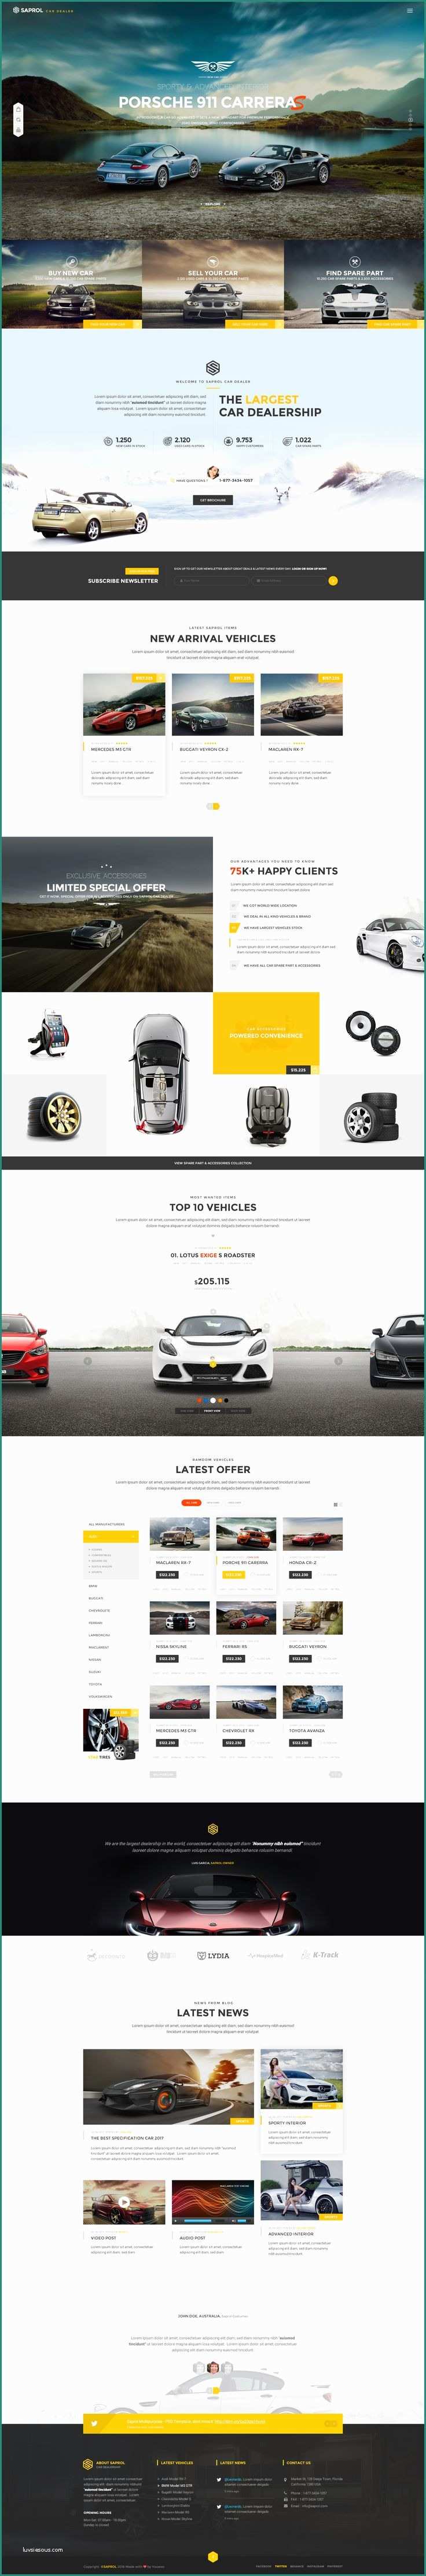 Carraro Mercedes Km E 12 Best Web Design Portfolio Images On Pinterest